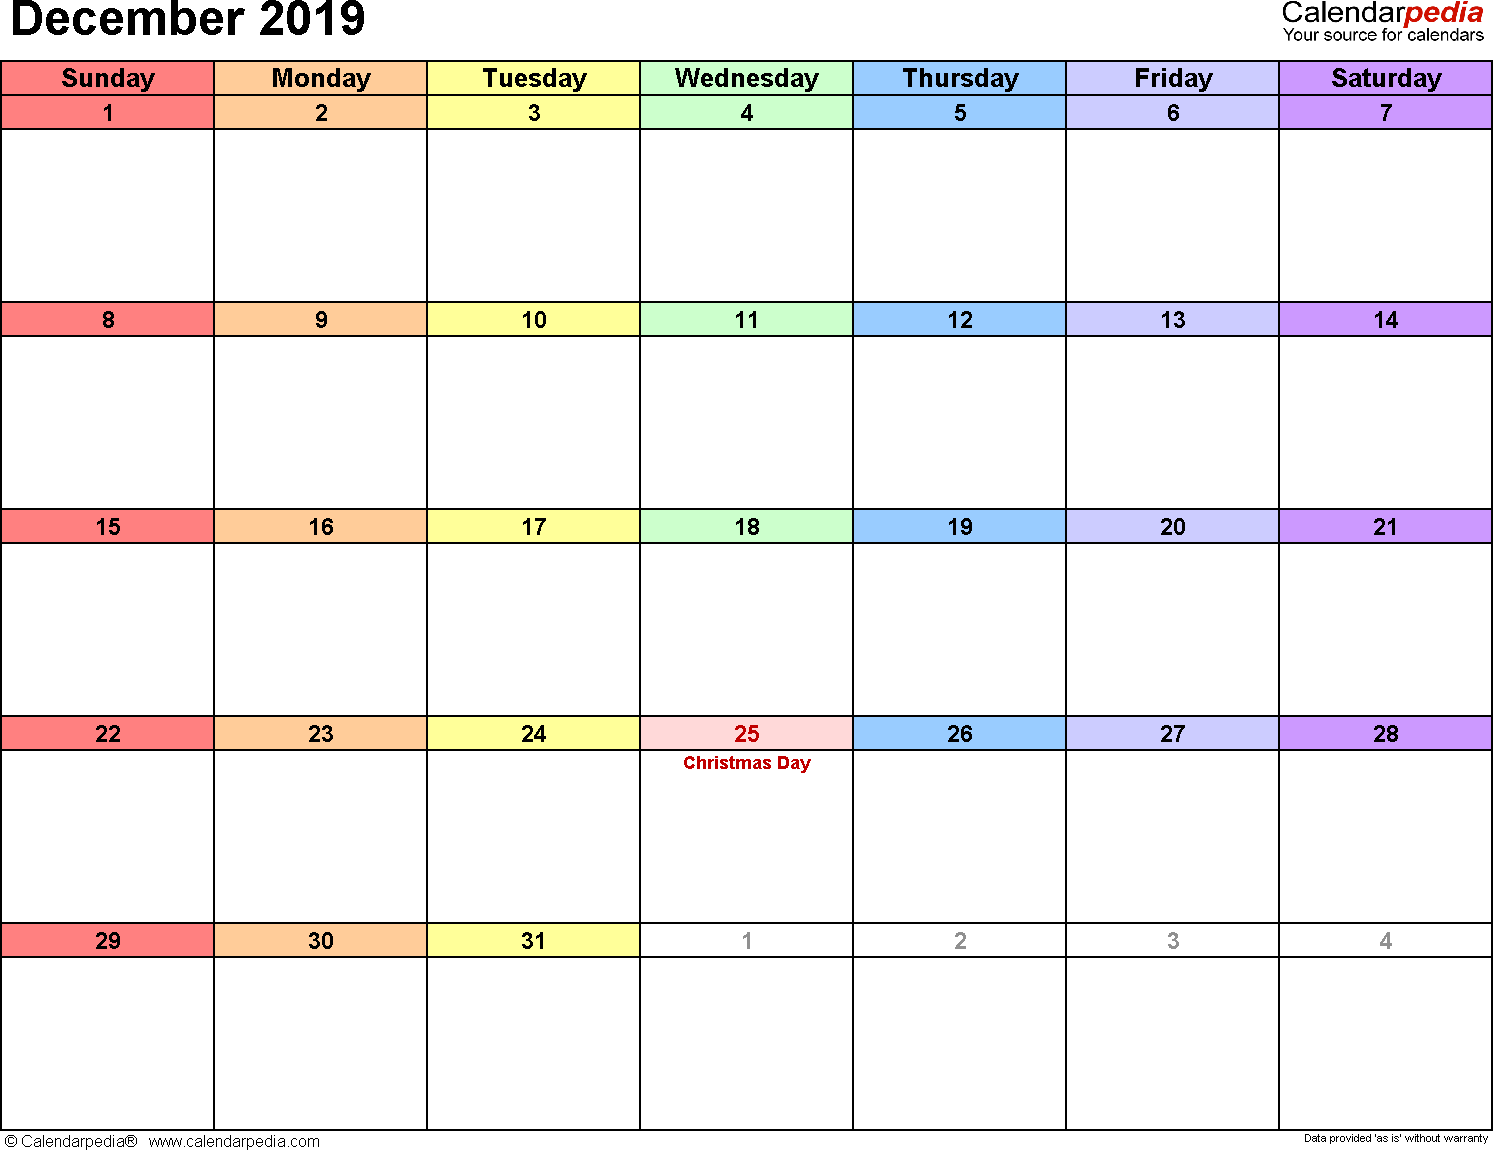 December 2019 calendar printable template